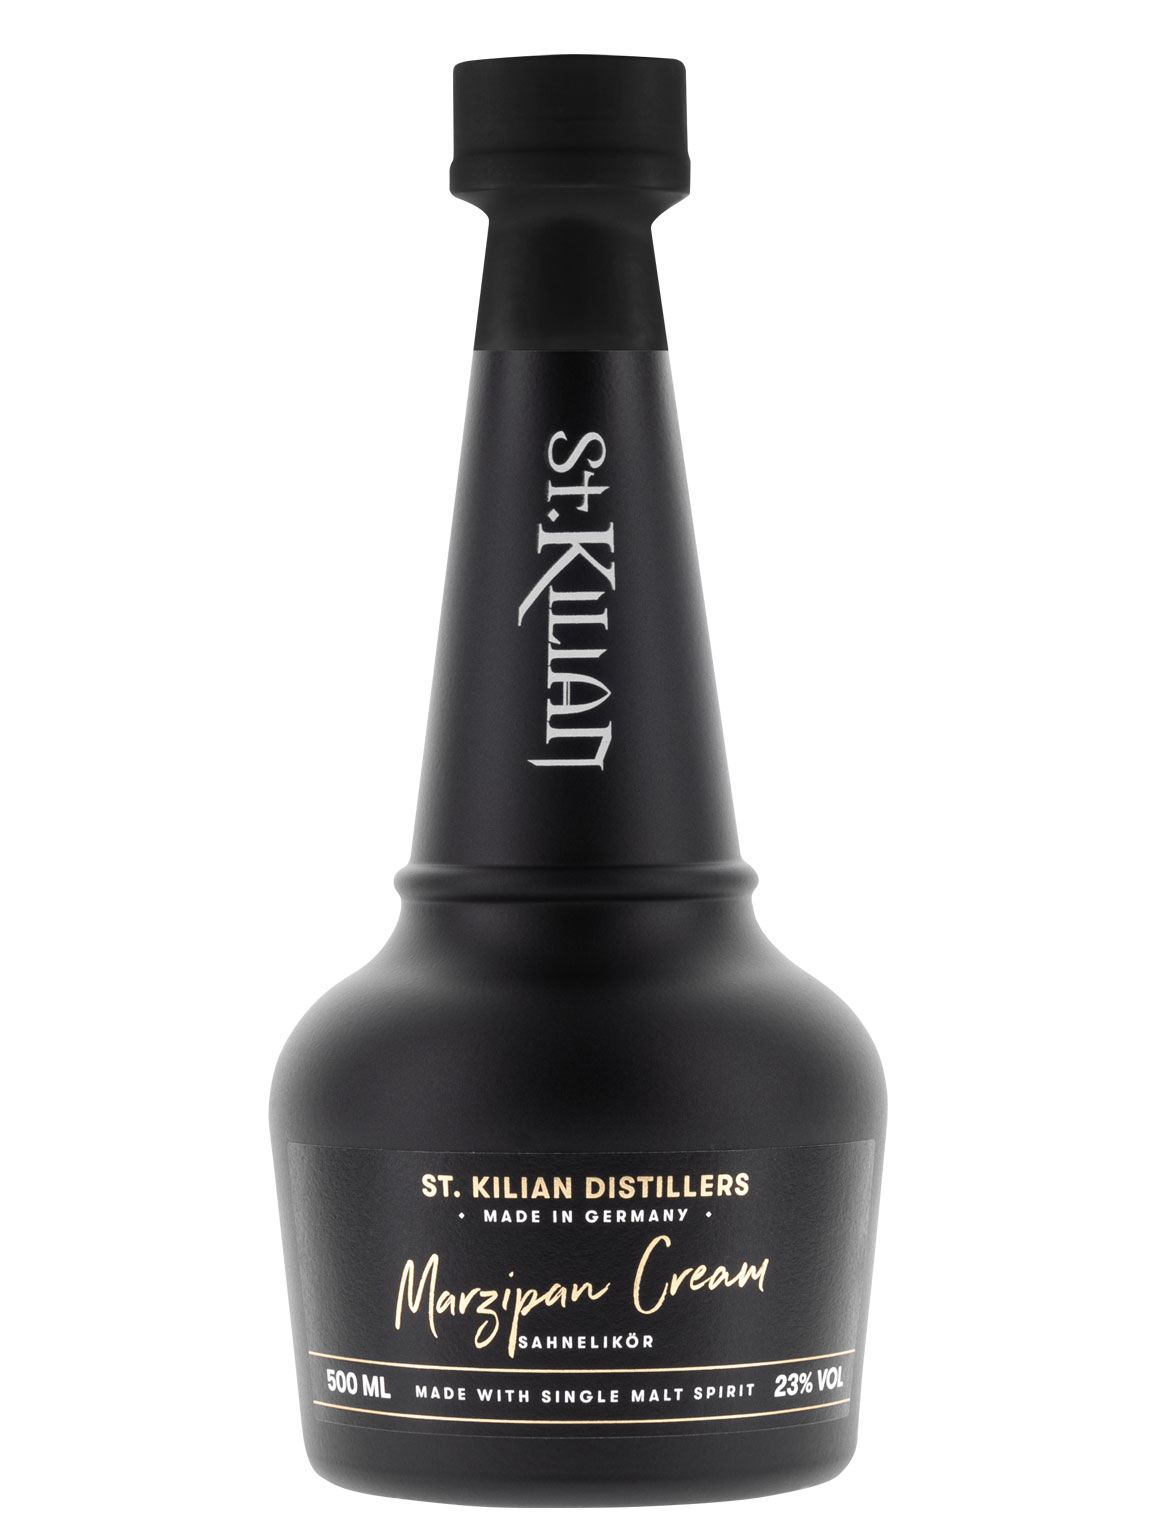 MARZIPAN-CREAM Kilian Cream - - from 0.5l malt Distillers Single St. whisky 🥃 Germany liqueur,